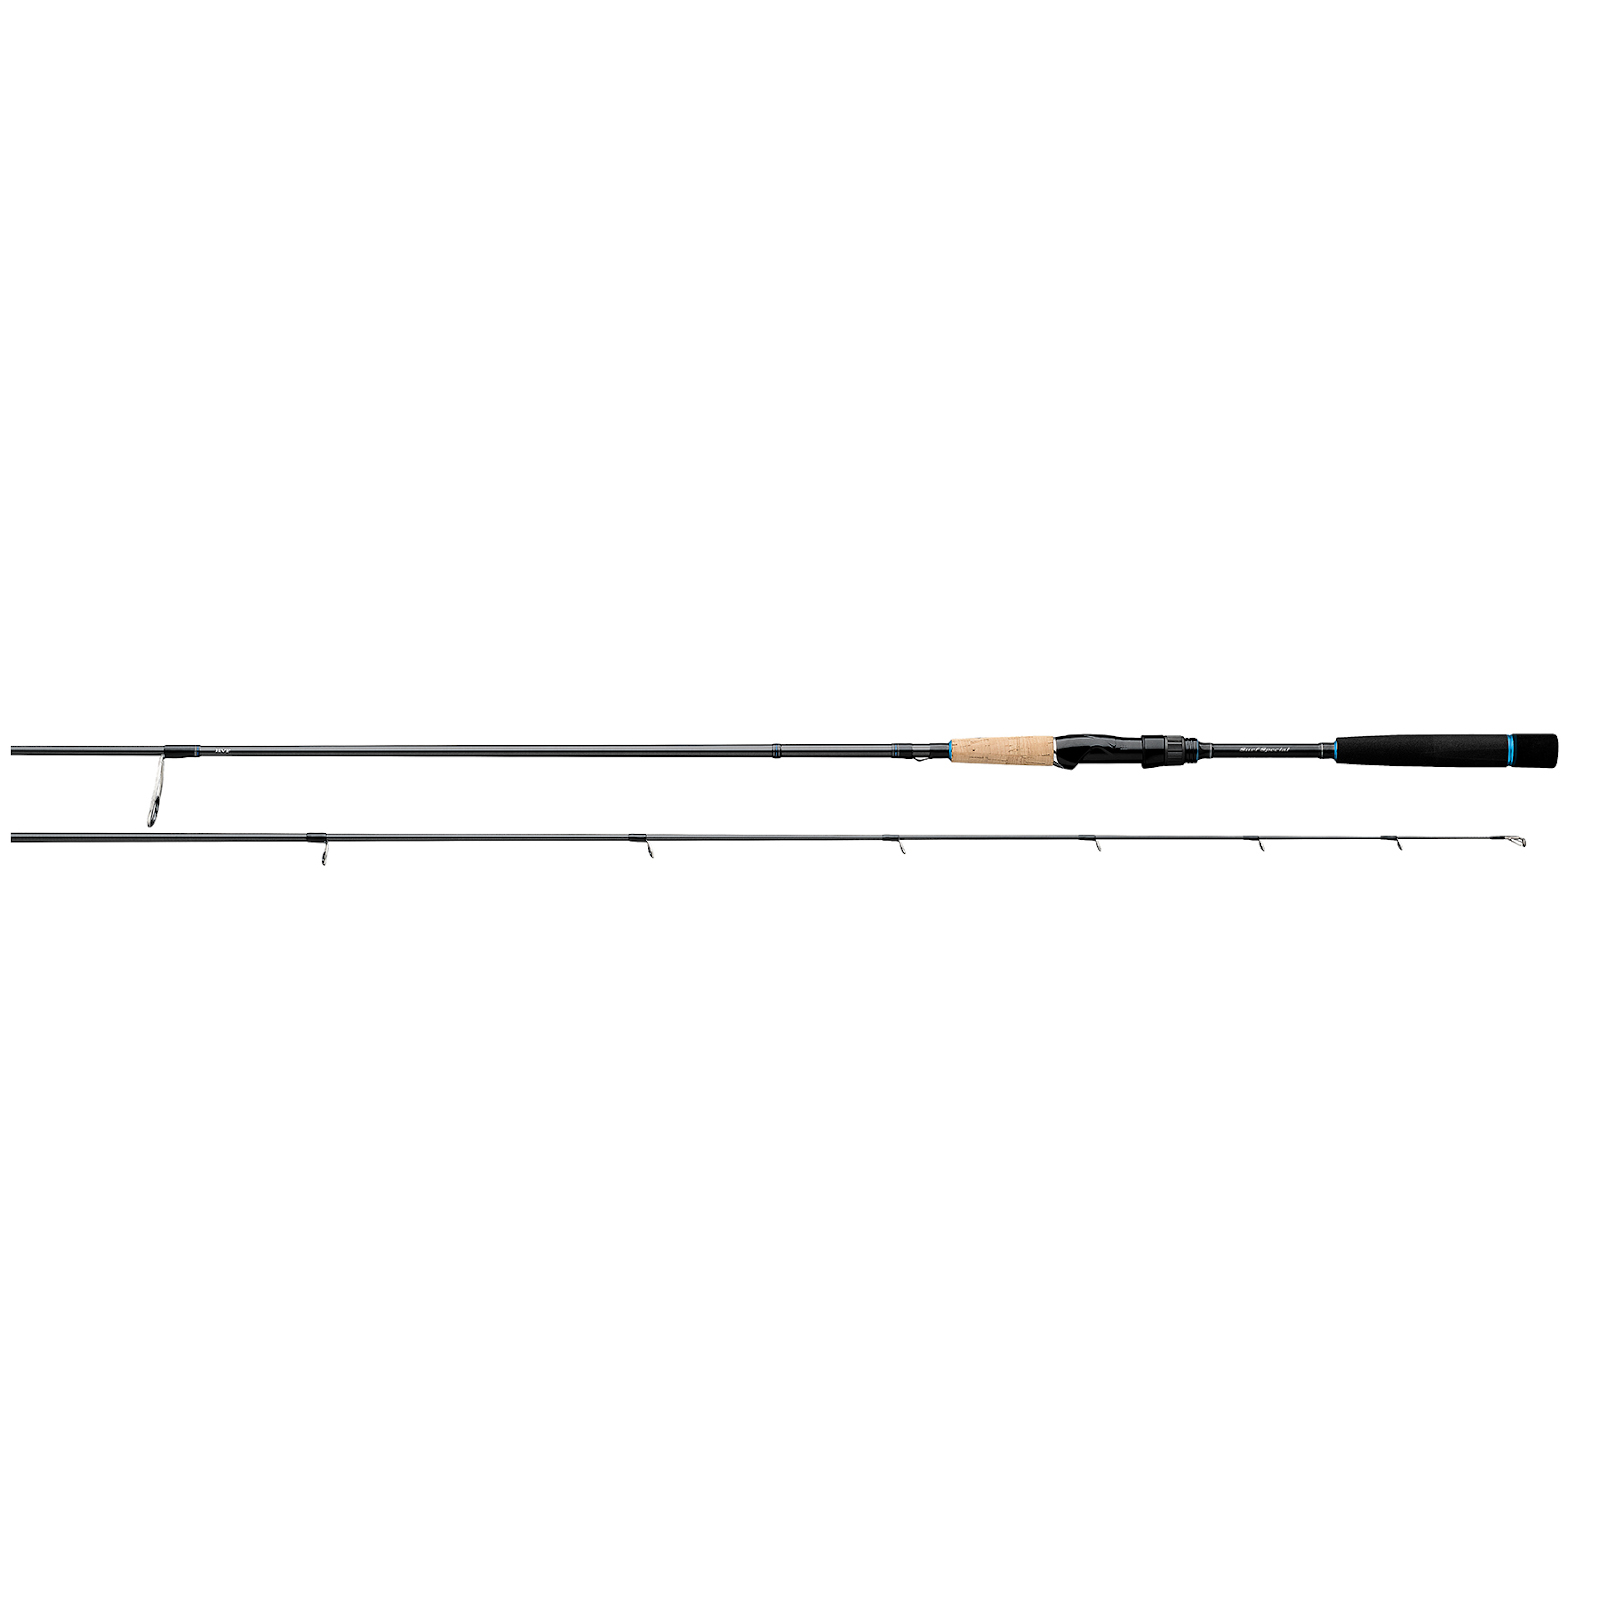 Daiwa Saltist Jigging Rod - 6'3 2pc 90-210g